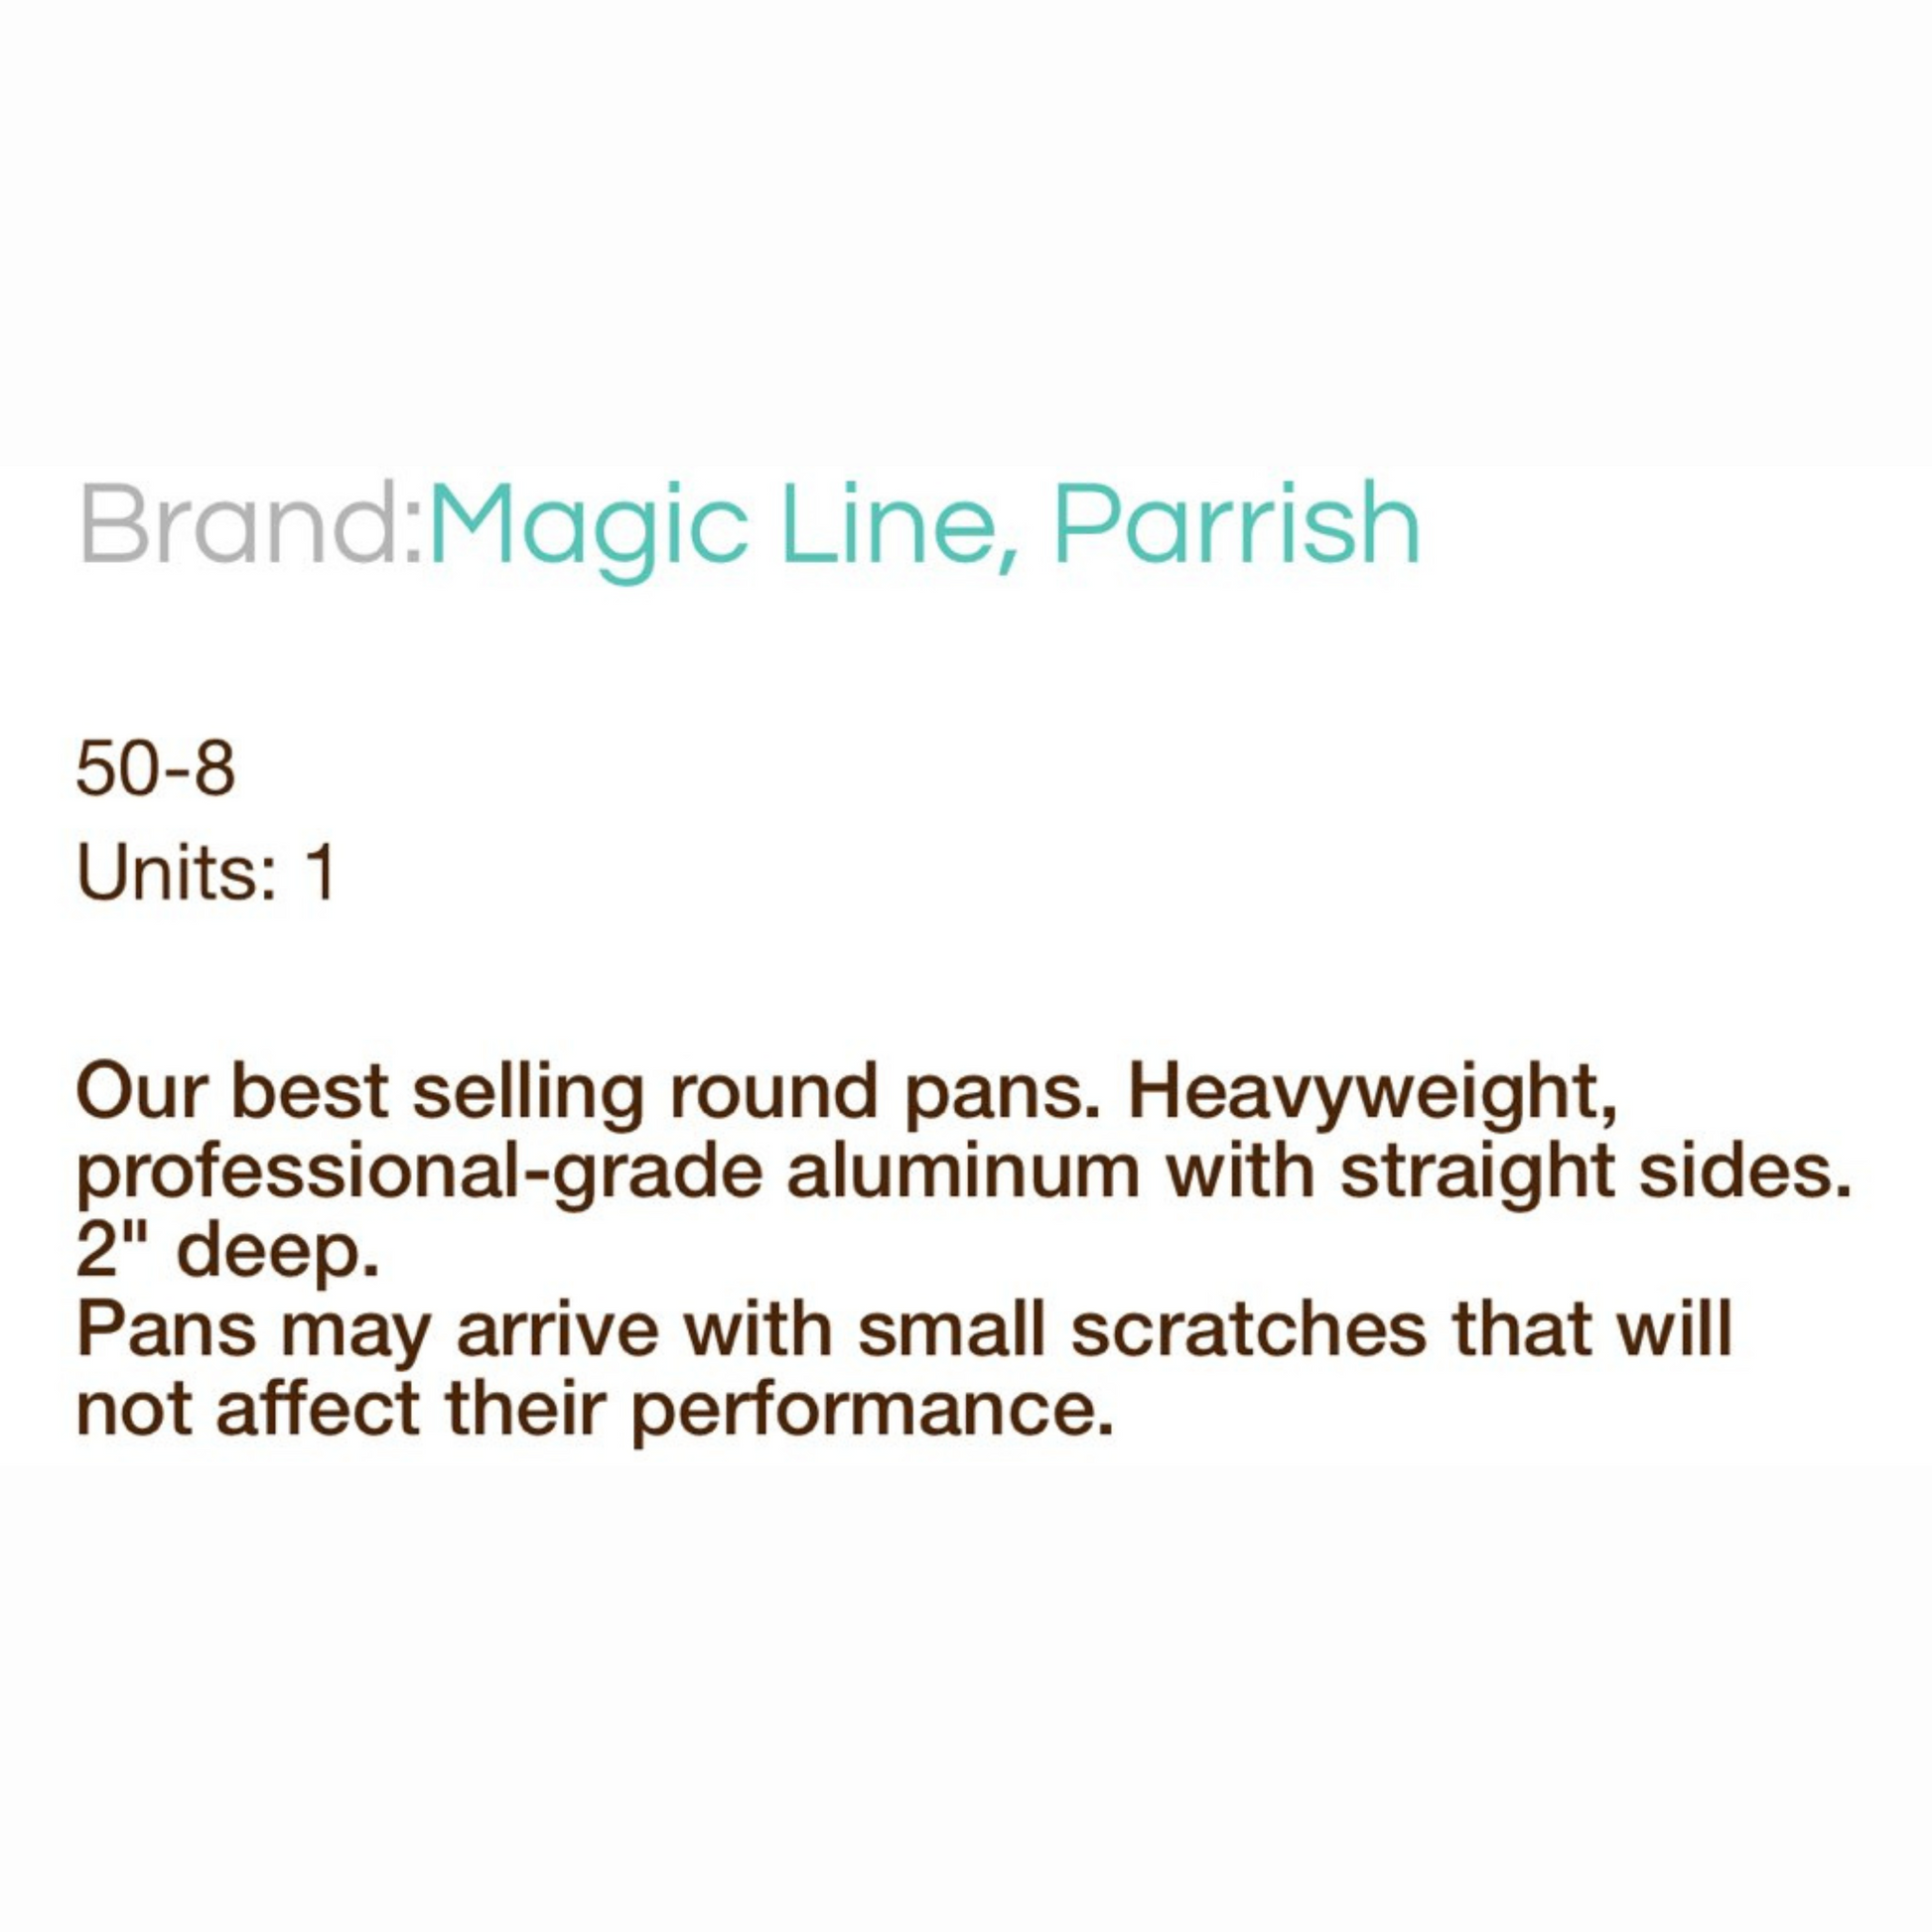 Parrish Magic Line 10 x 15 x 2 inch Oblong Cake Pan